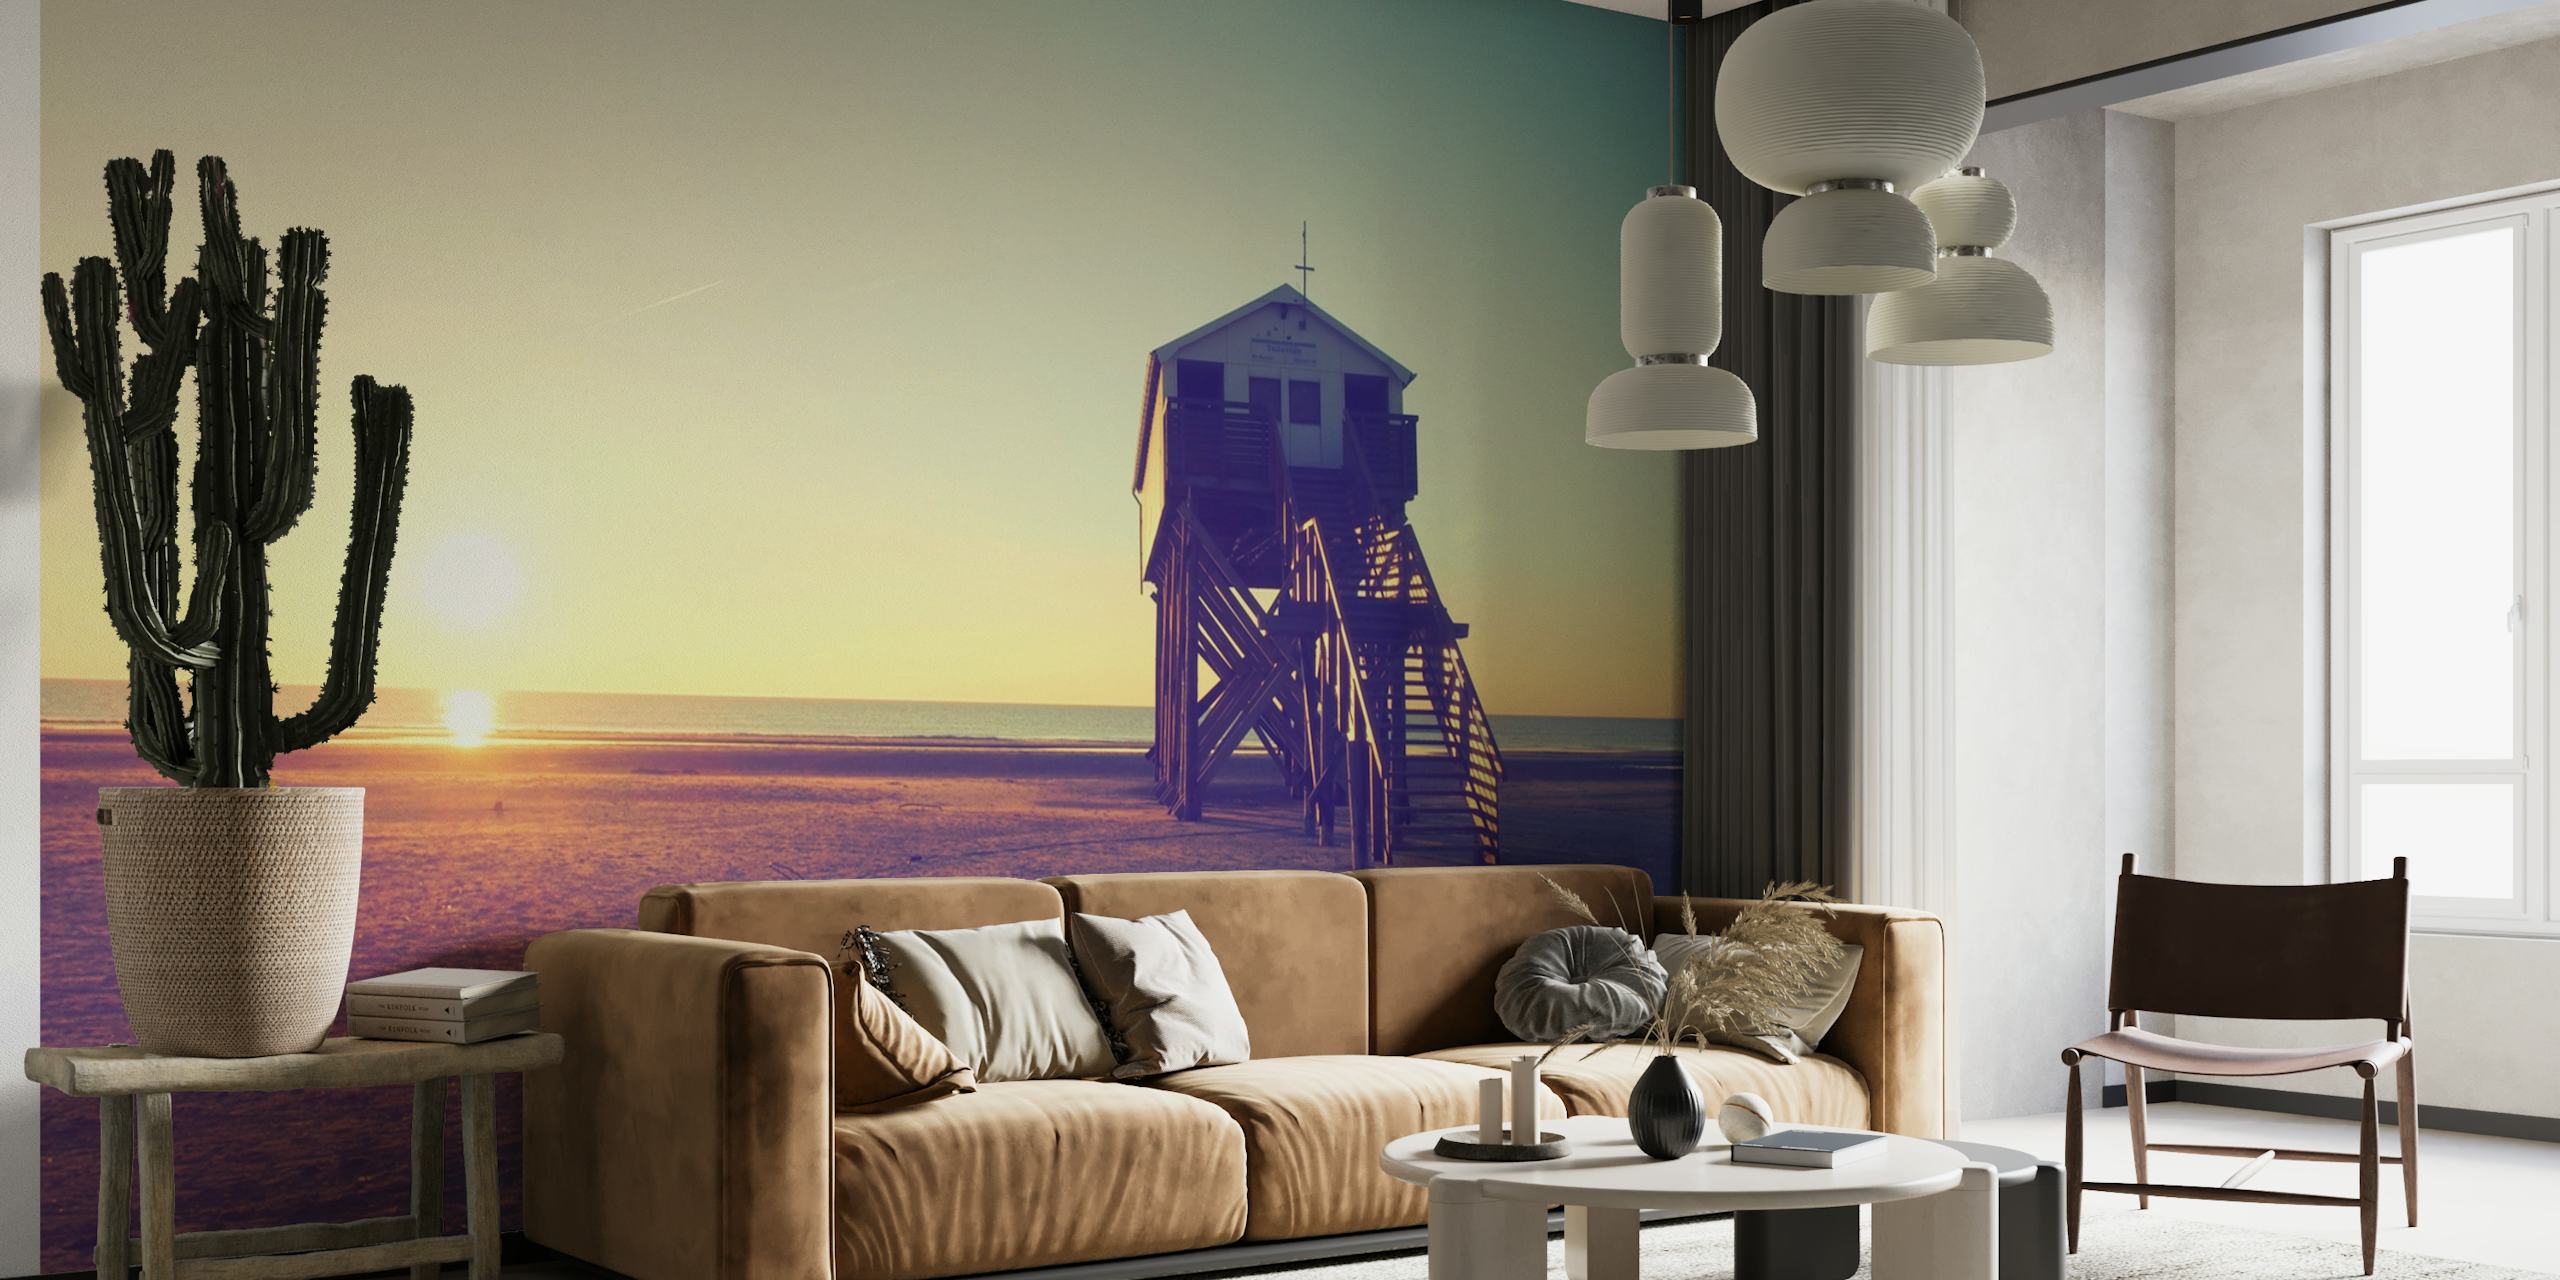 Kyst solnedgang vægmaleri med strandhus silhuet